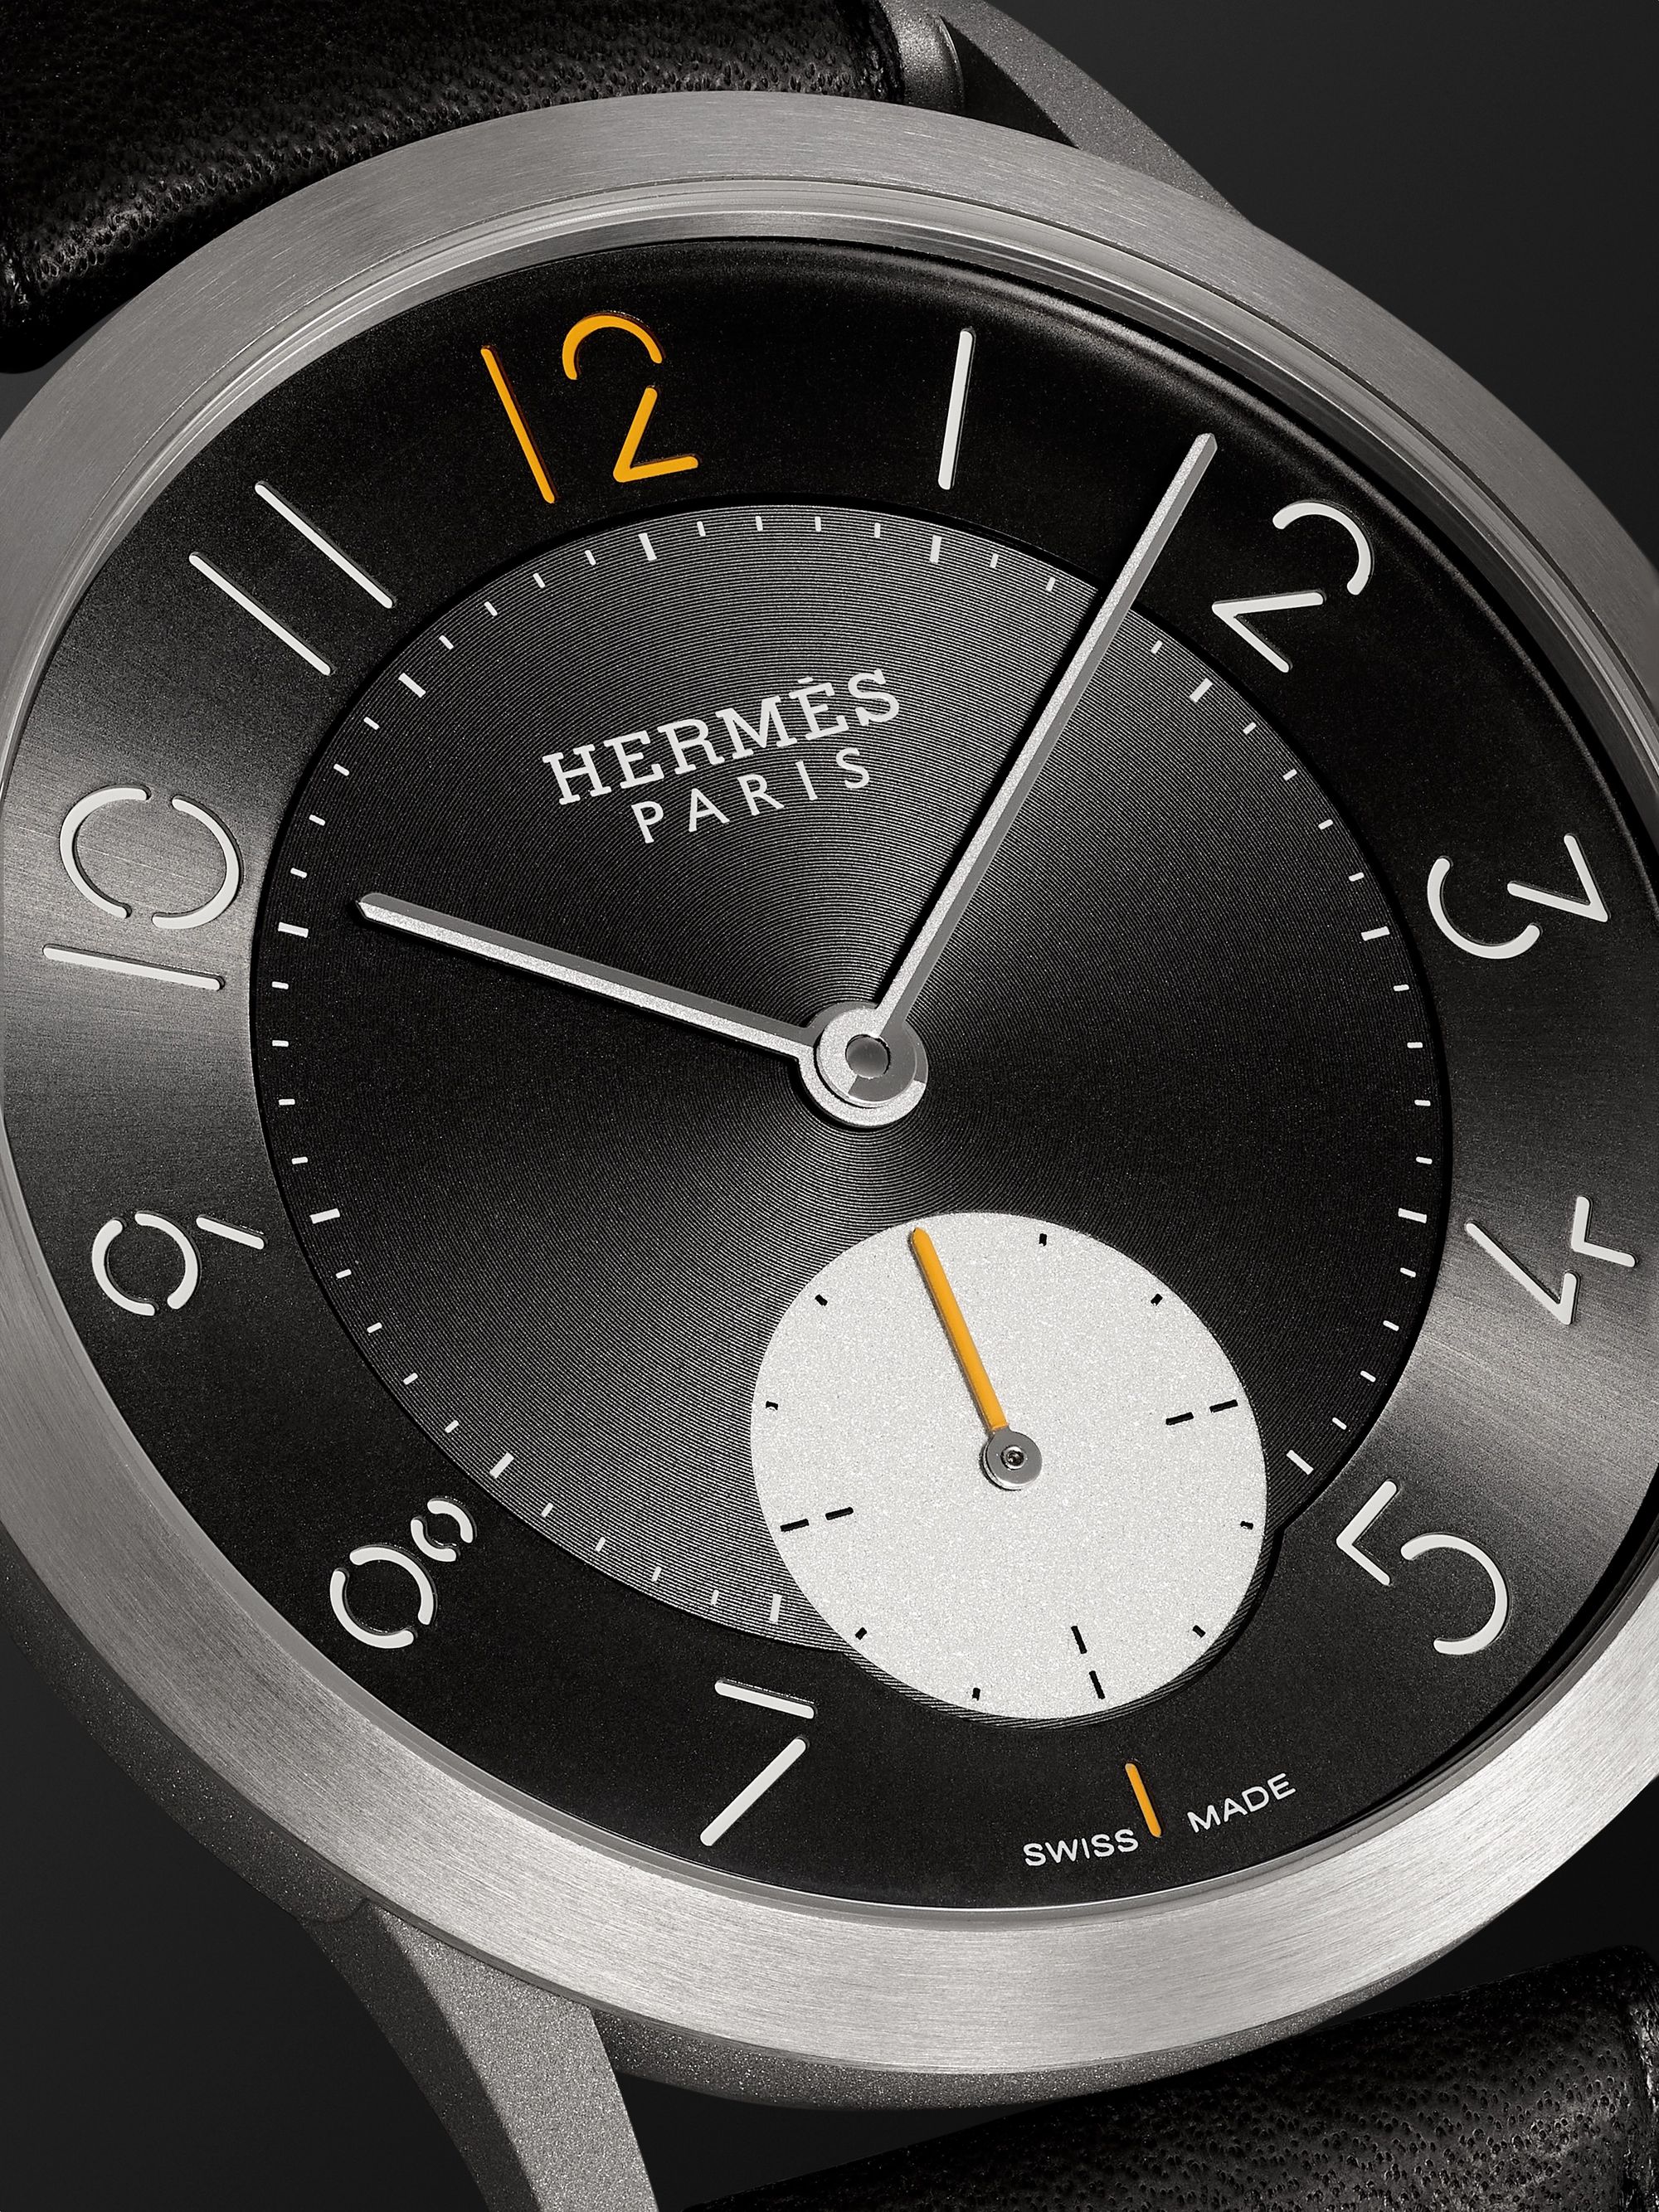 HERMÈS TIMEPIECES Slim d’Hermès Titane 39.5mm Titanium and Alligator Watch, Ref. No. 052845WW00